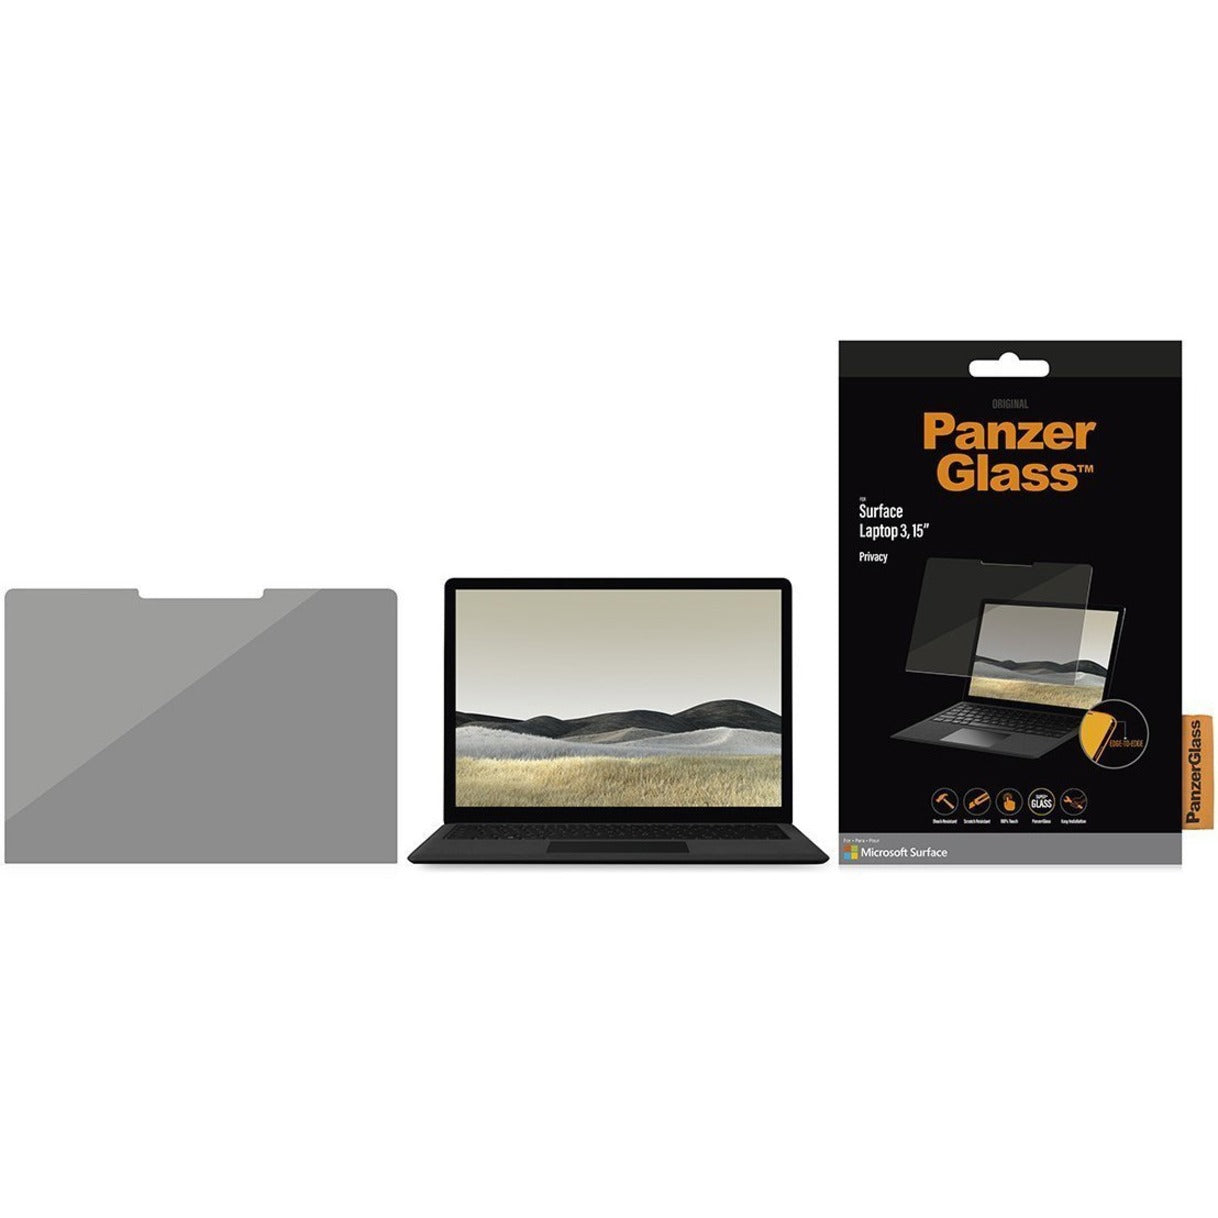 PanzerGlass P6256 Original Privacy Screen Filter, Anti-Glare, 15" Display Size Supported